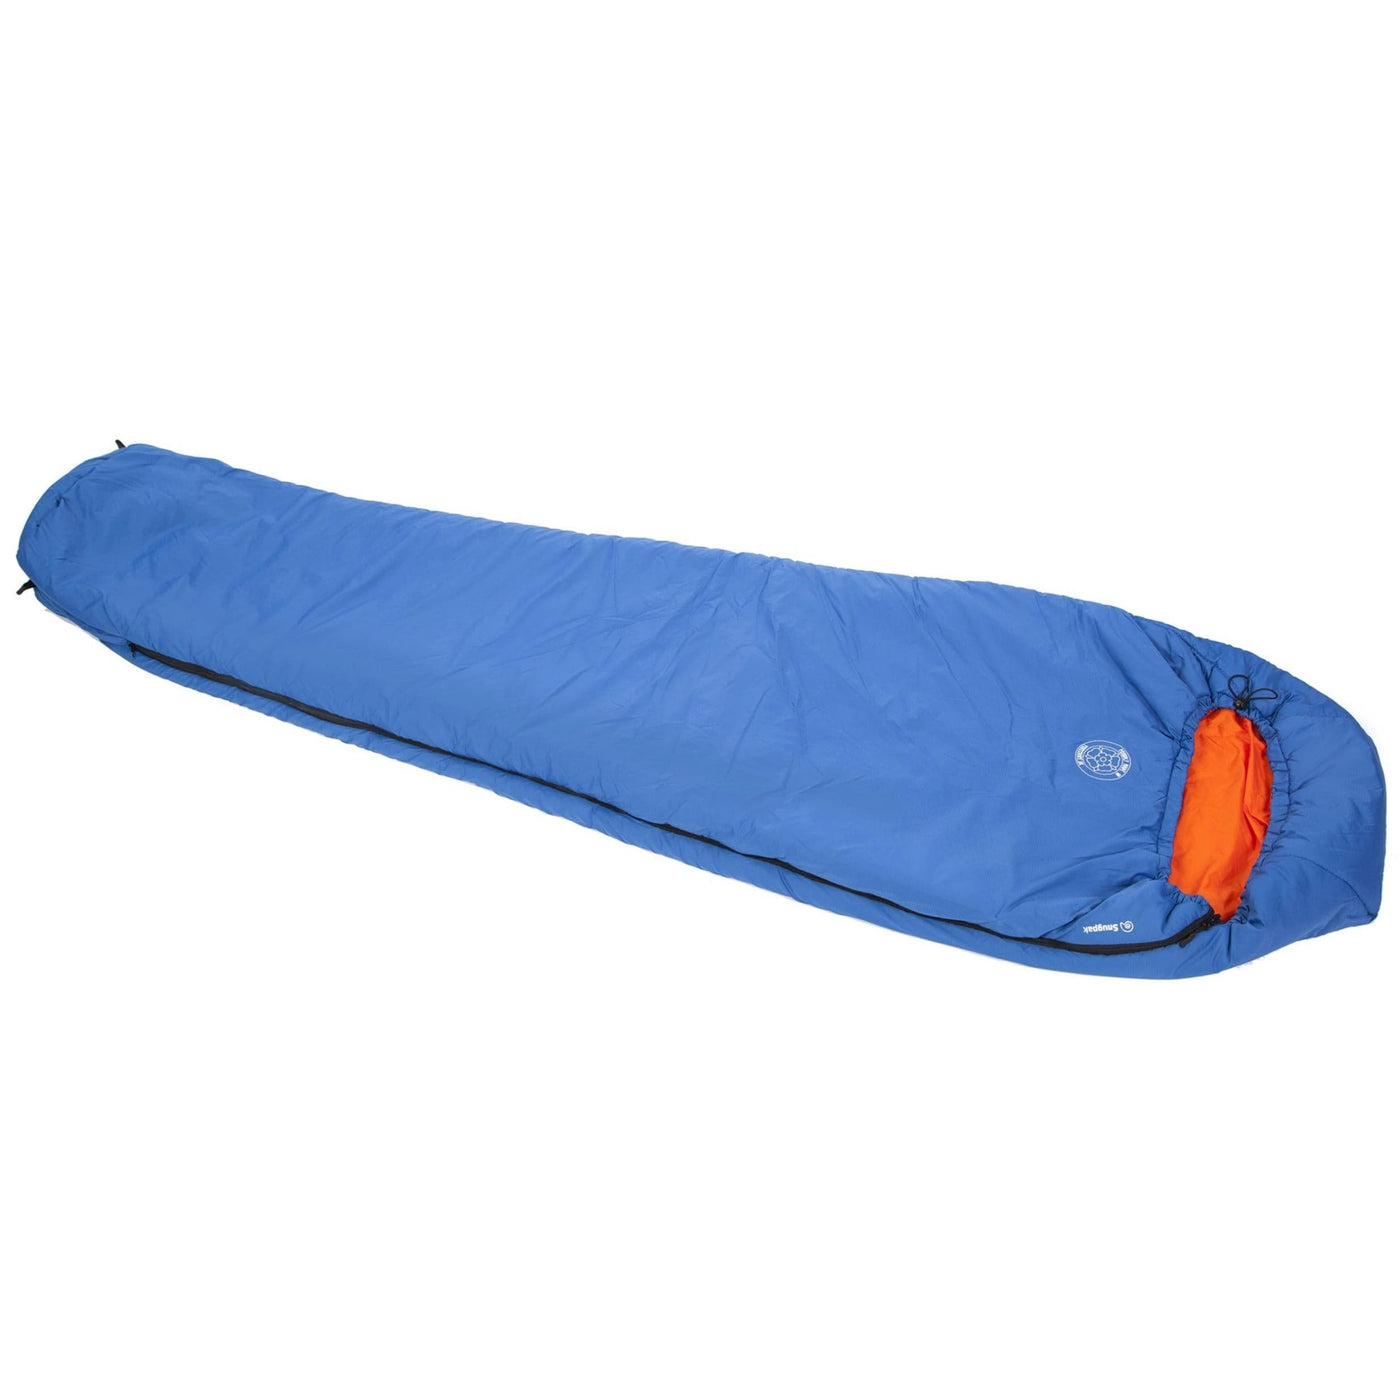 Snugpak Snugpak Softie 6 Twilight Sleeping Bag Blue Zip Right hand Camping And Outdoor